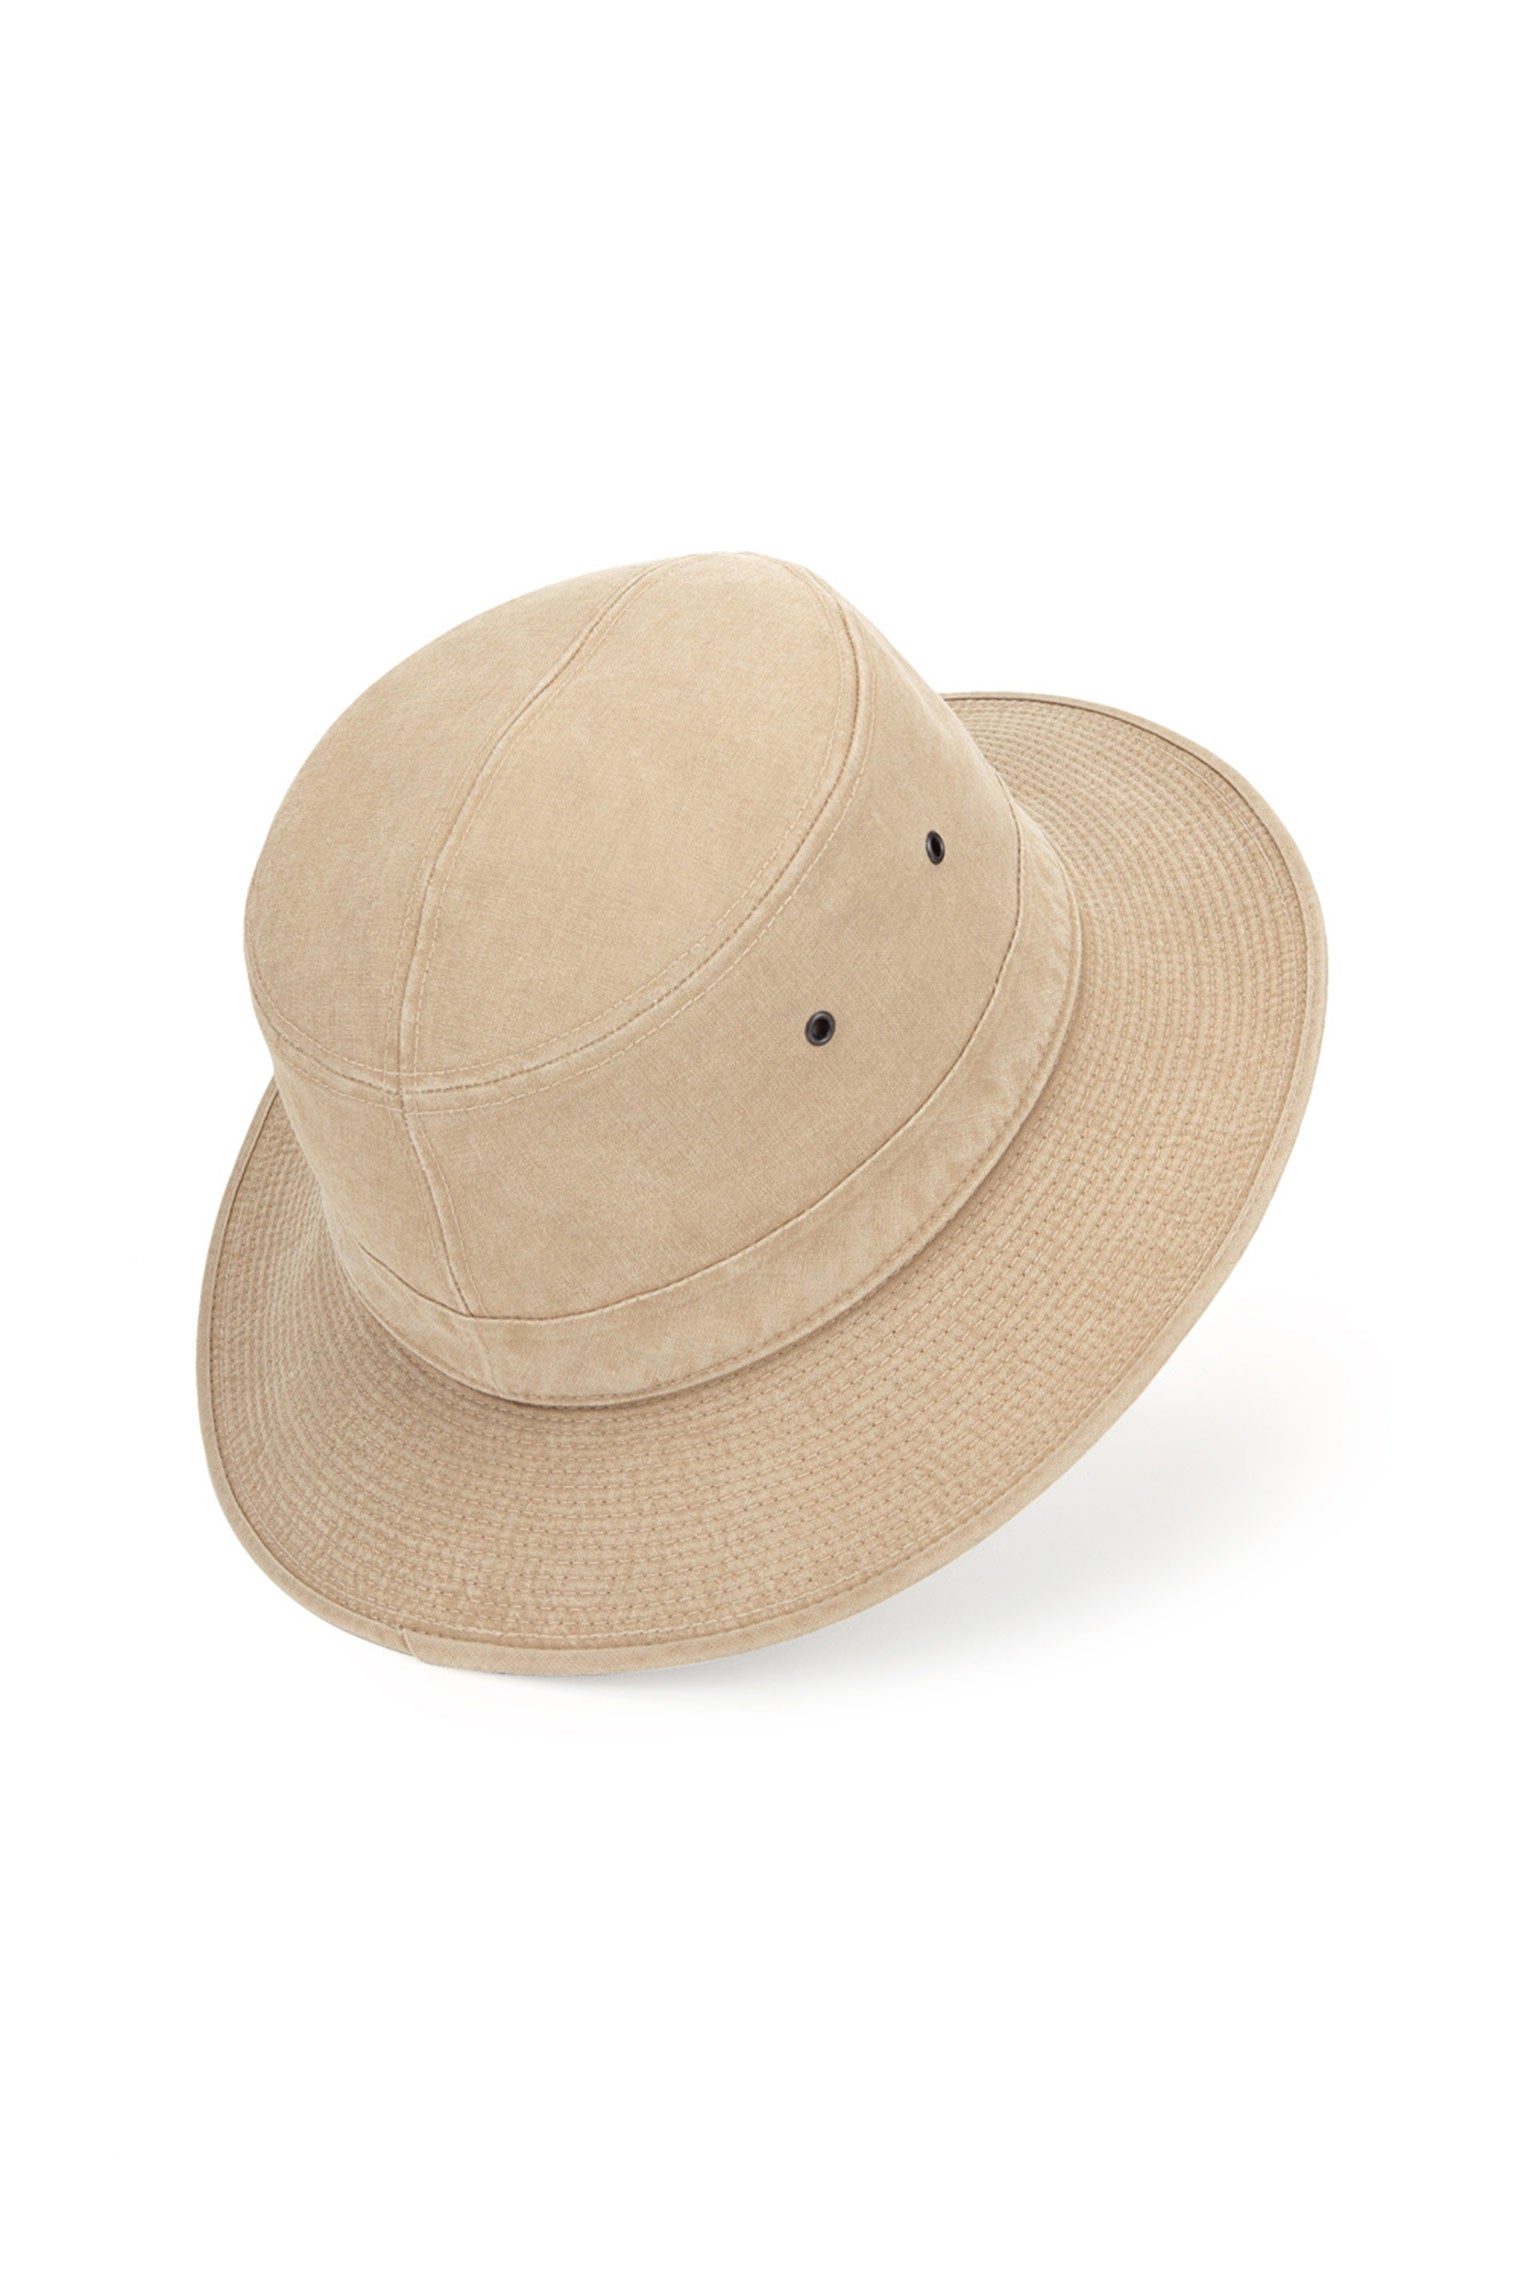 Capri Rollable Hat - Mens Featured - Lock & Co. Hatters London UK